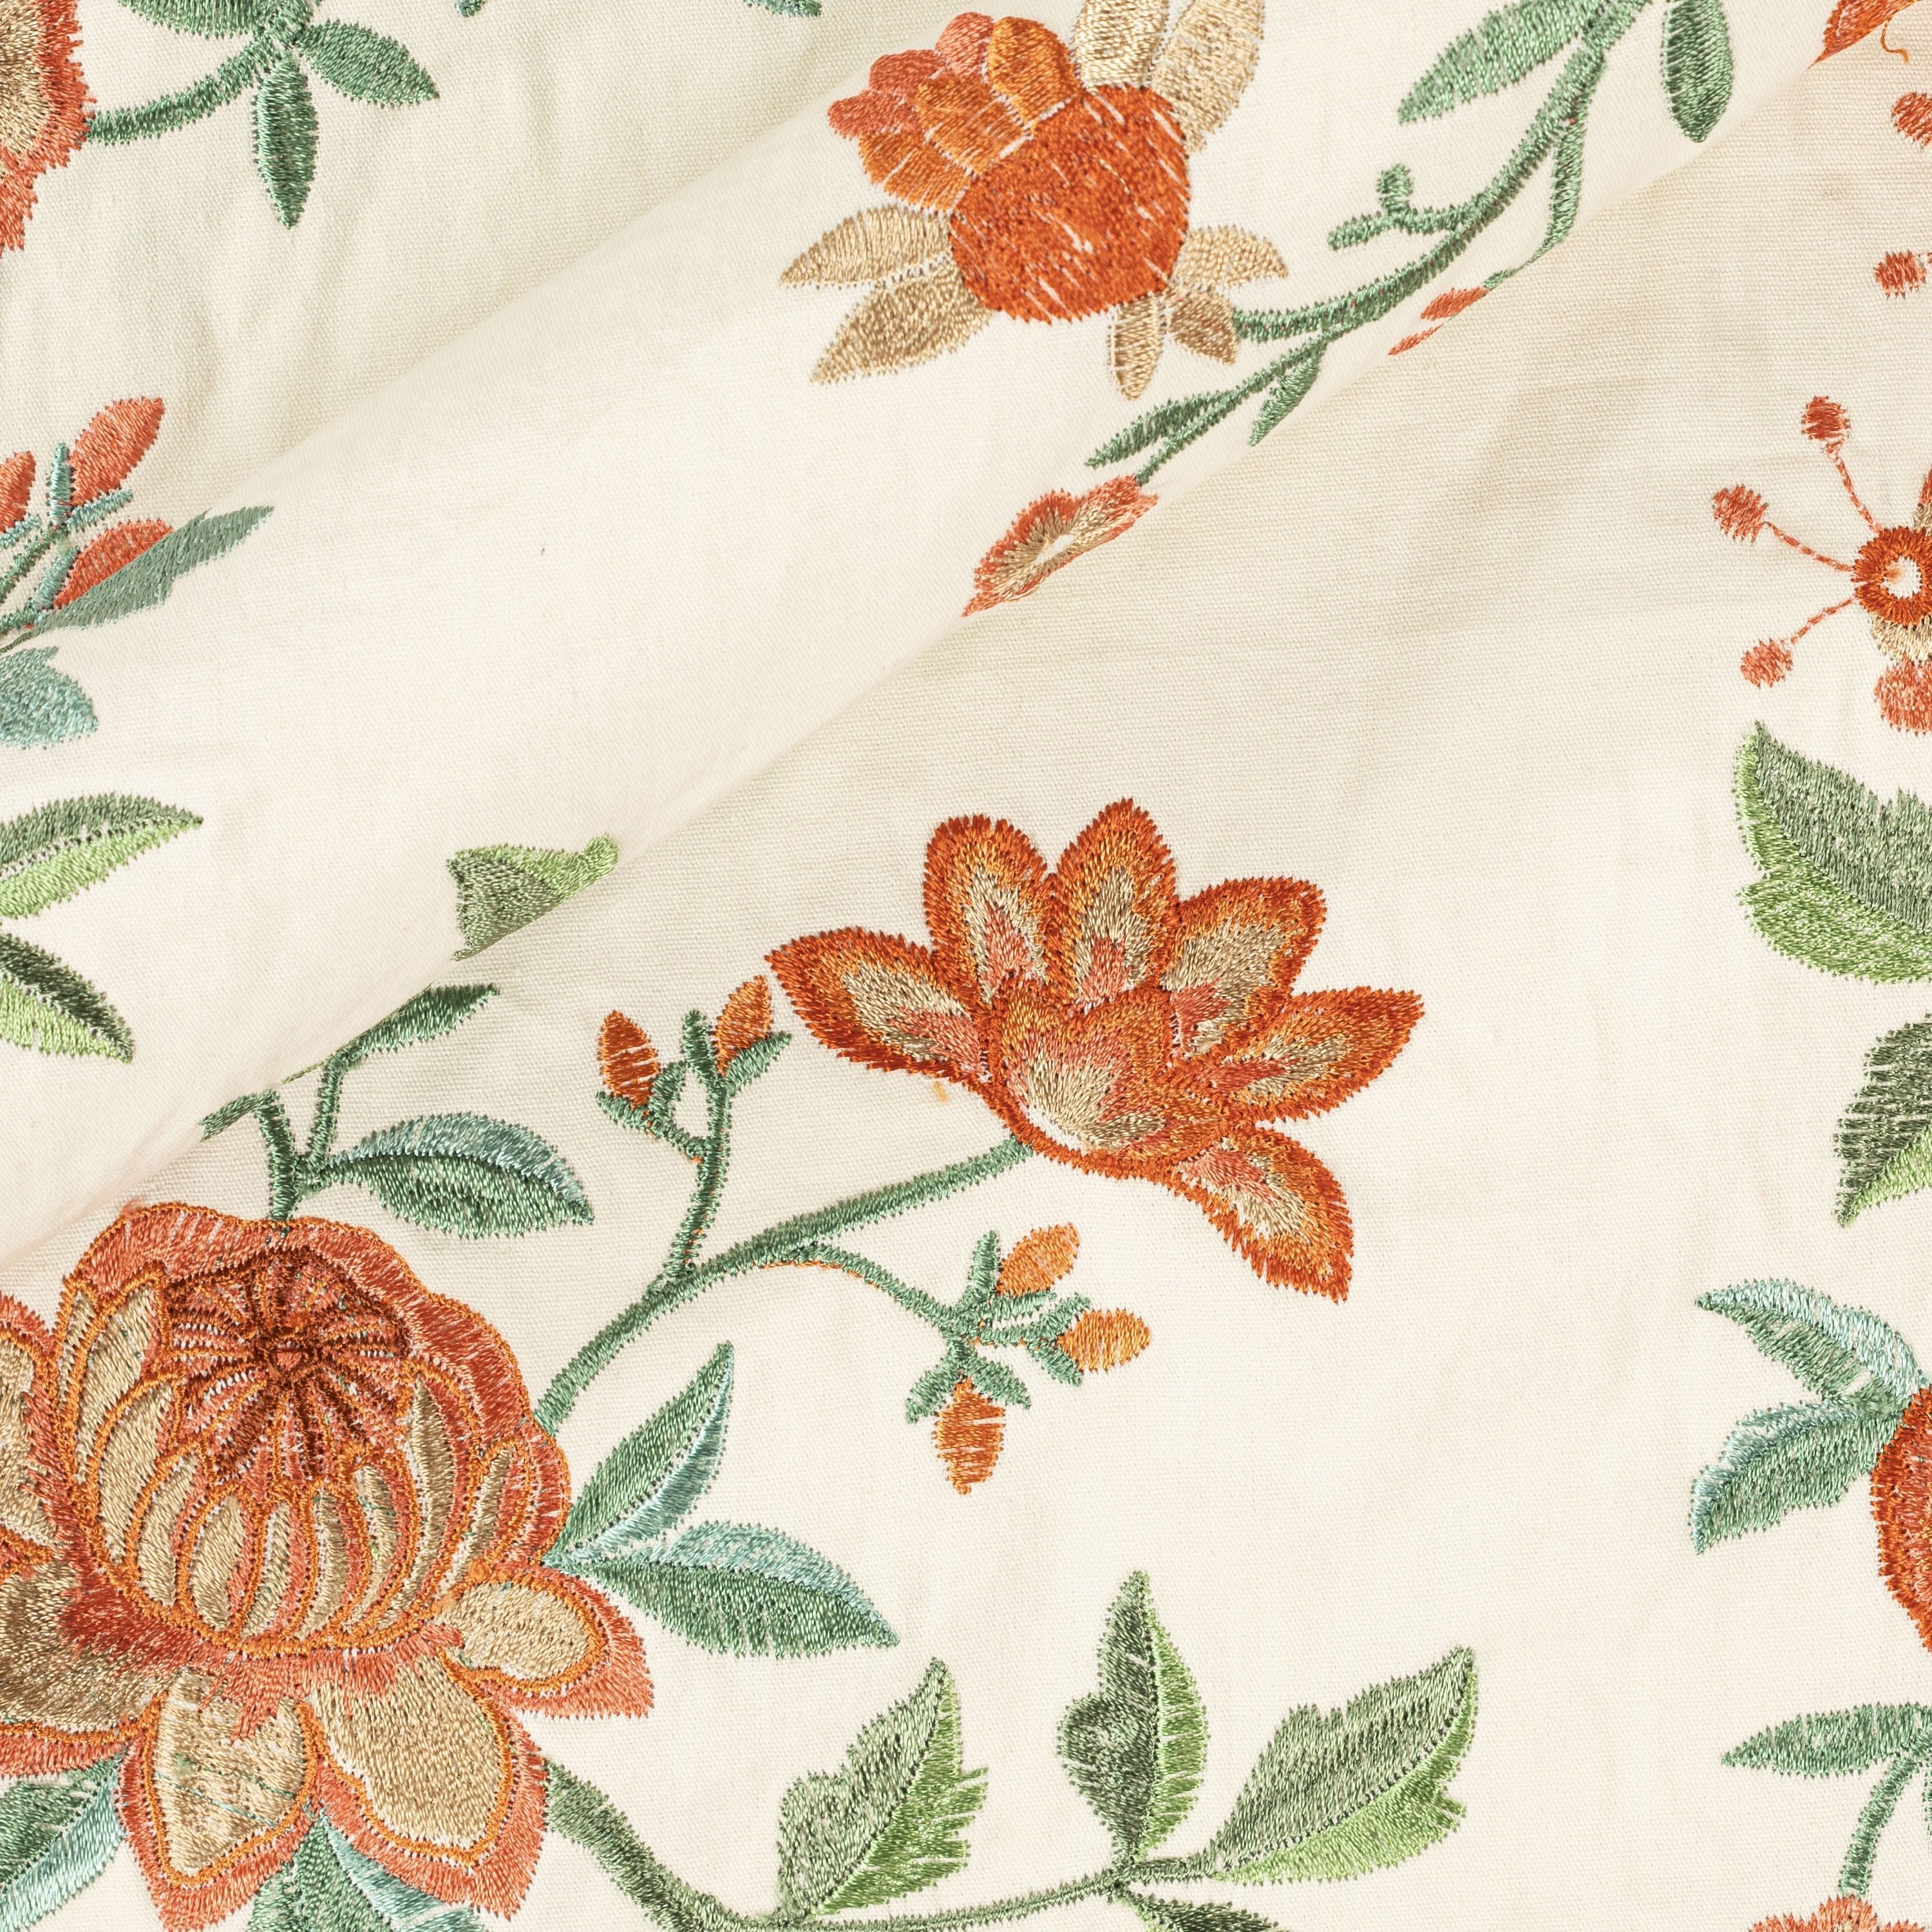 Floral embroidery on cotton - Ungaro Première SS 2020 - U64565